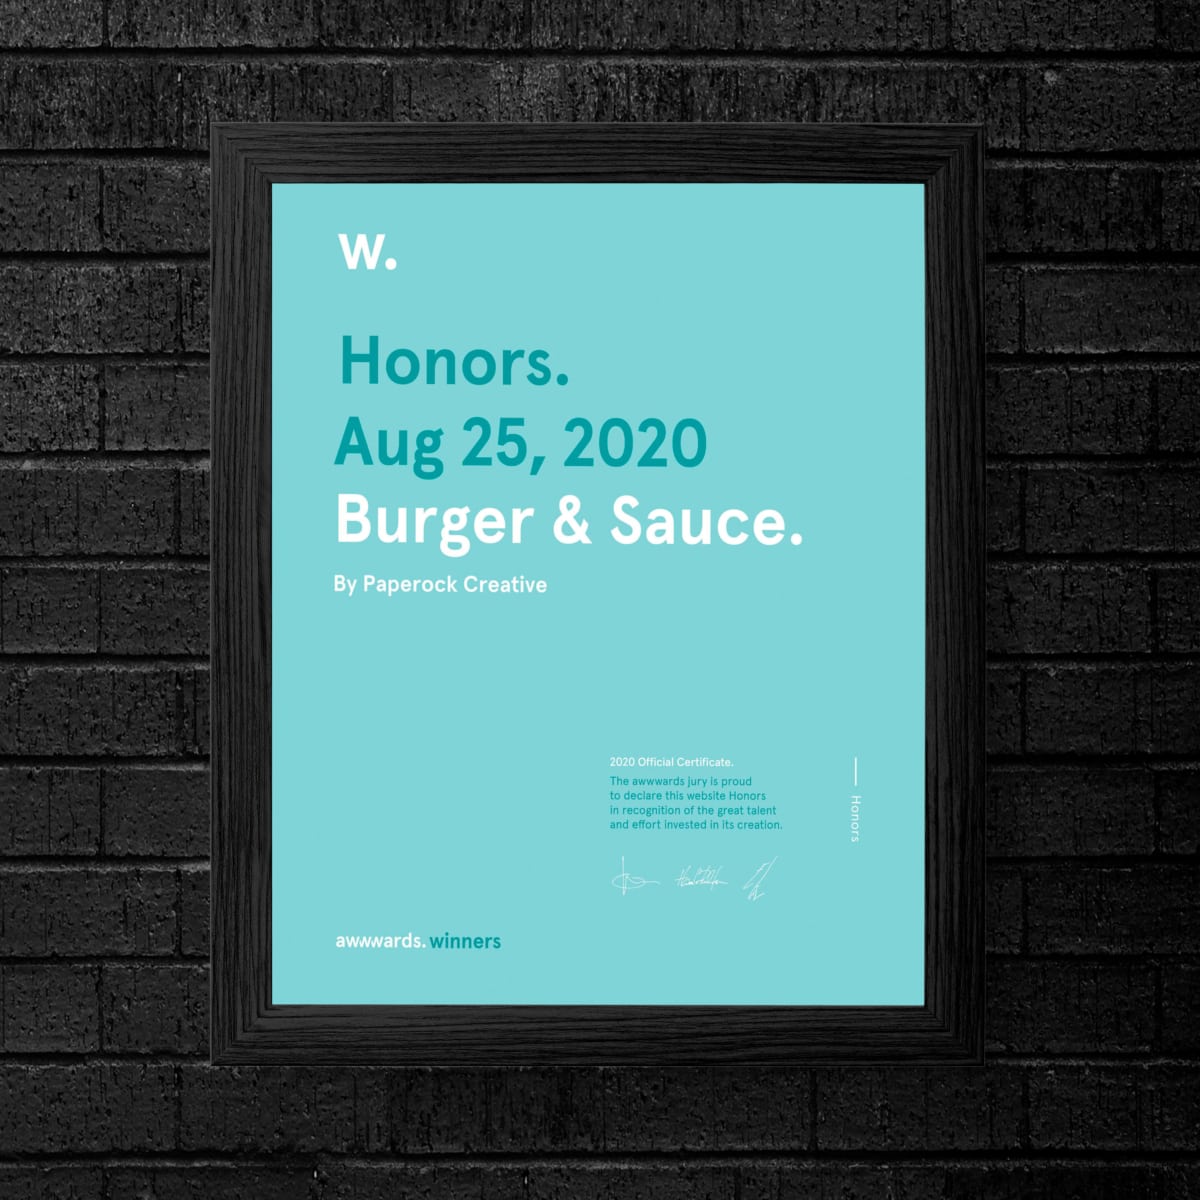 paperock creative website design honors awwwards burger and sauce